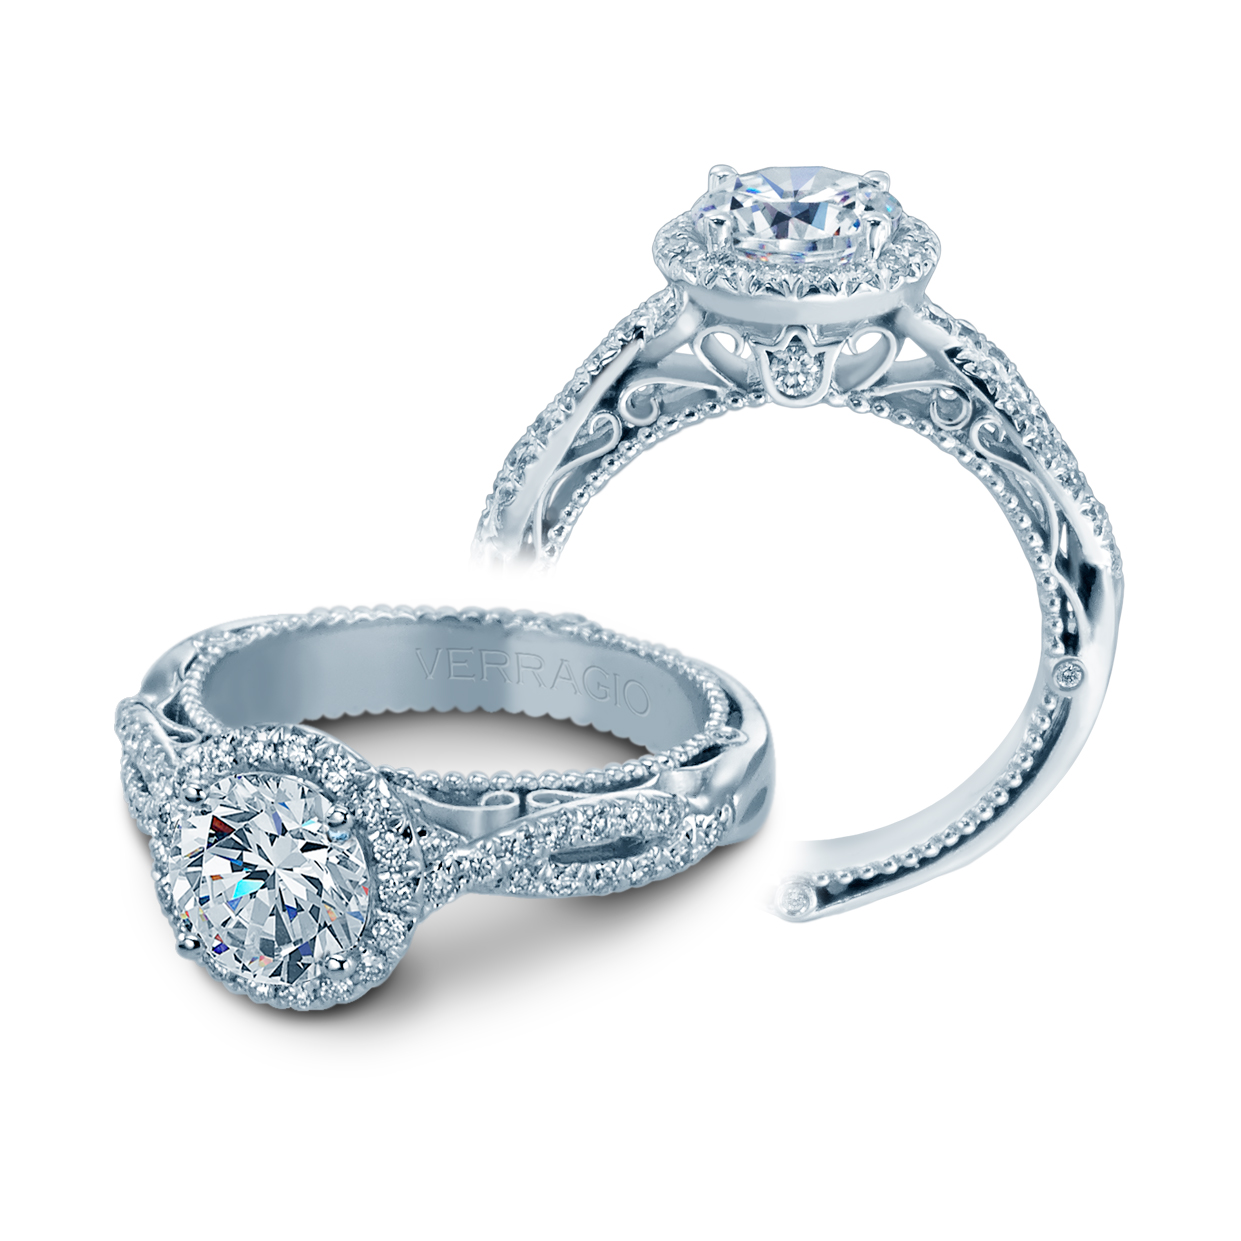 Stunning Diamond Engagement Ring Mounting by Verragio